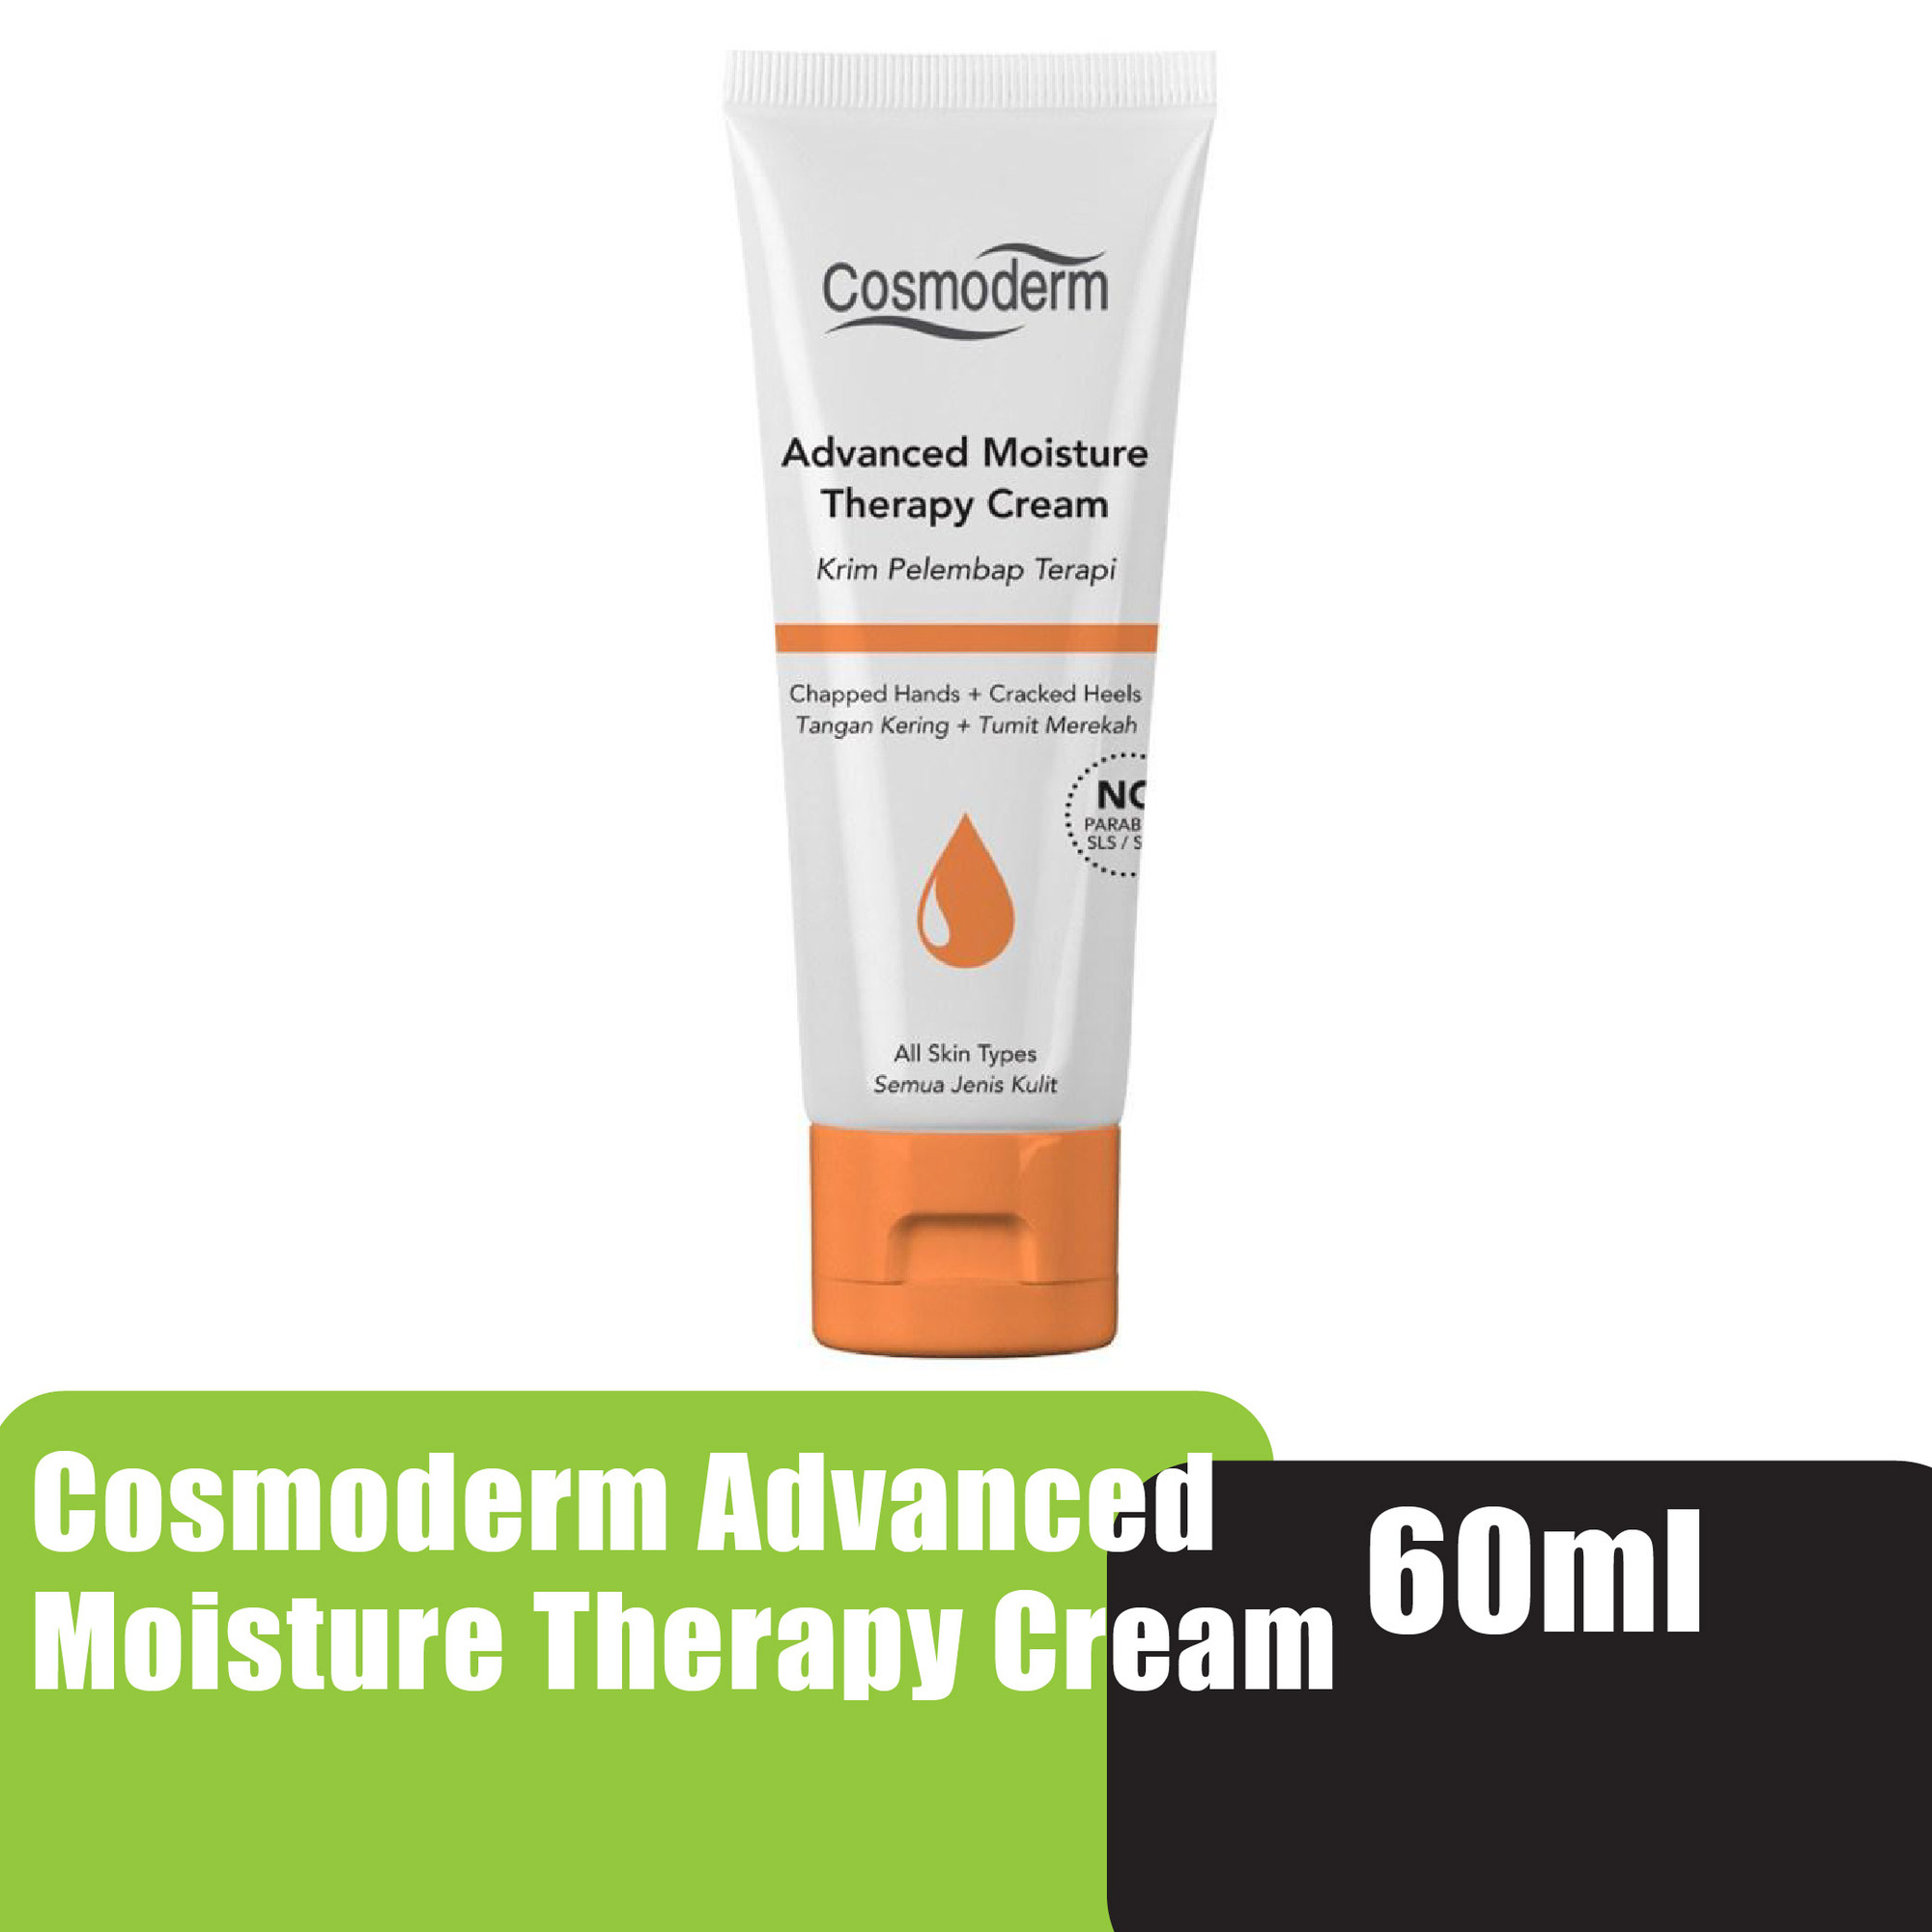 Cosmoderm Advanced Moisture Therapy Cream 60ml